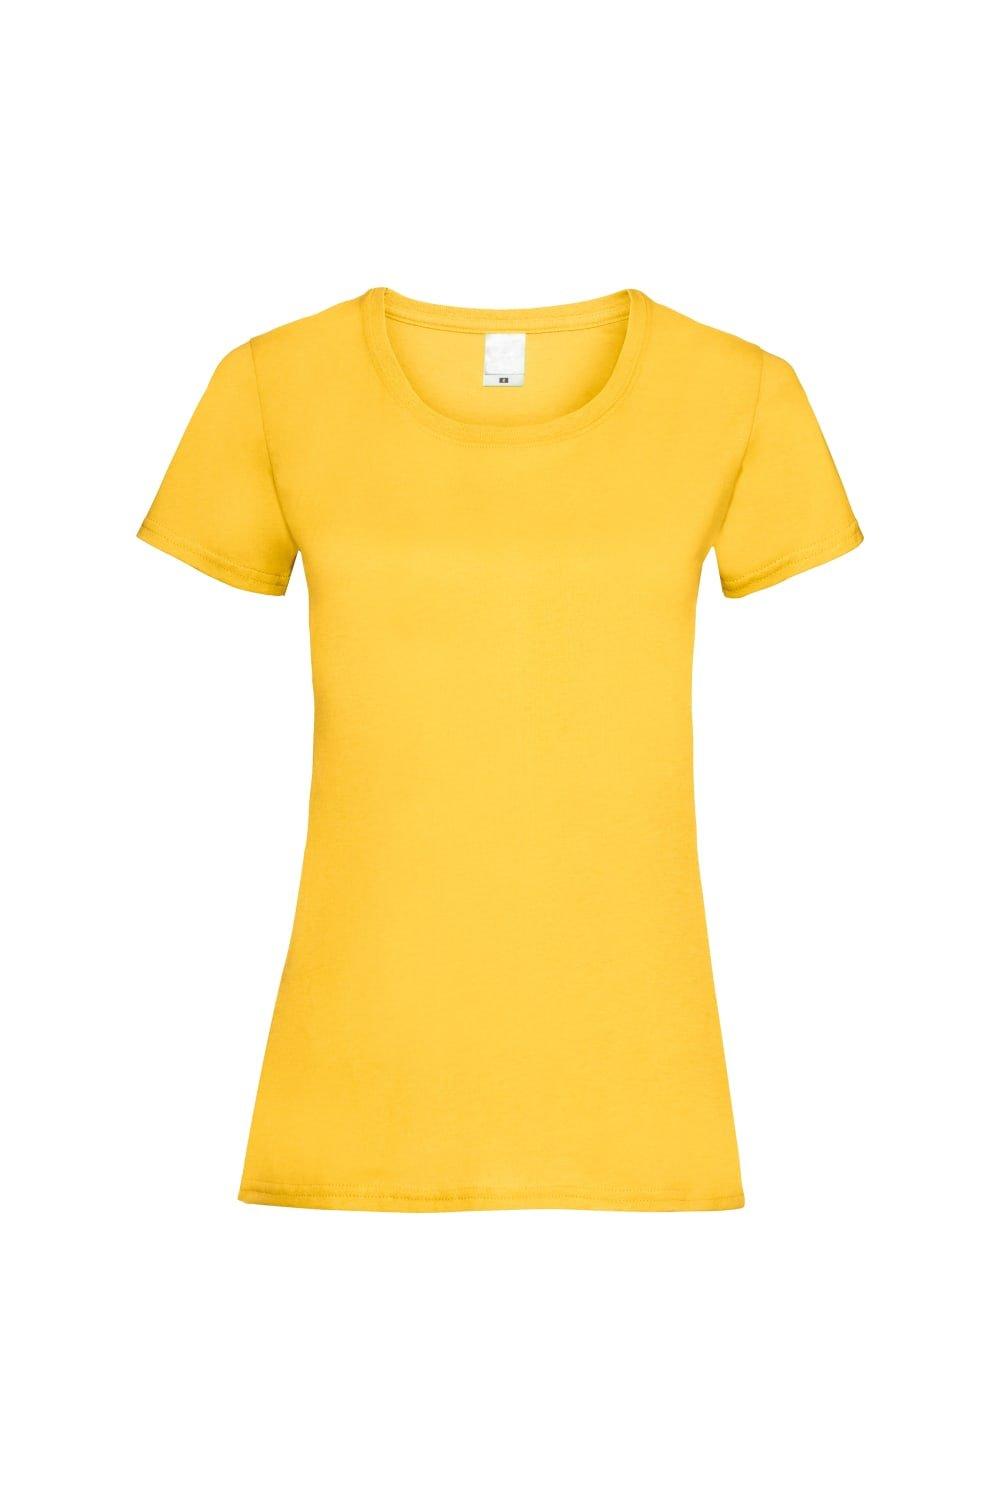 Повседневная футболка с короткими рукавами Value Universal Textiles, золото мужская футболка игуана с коктейлем s серый меланж